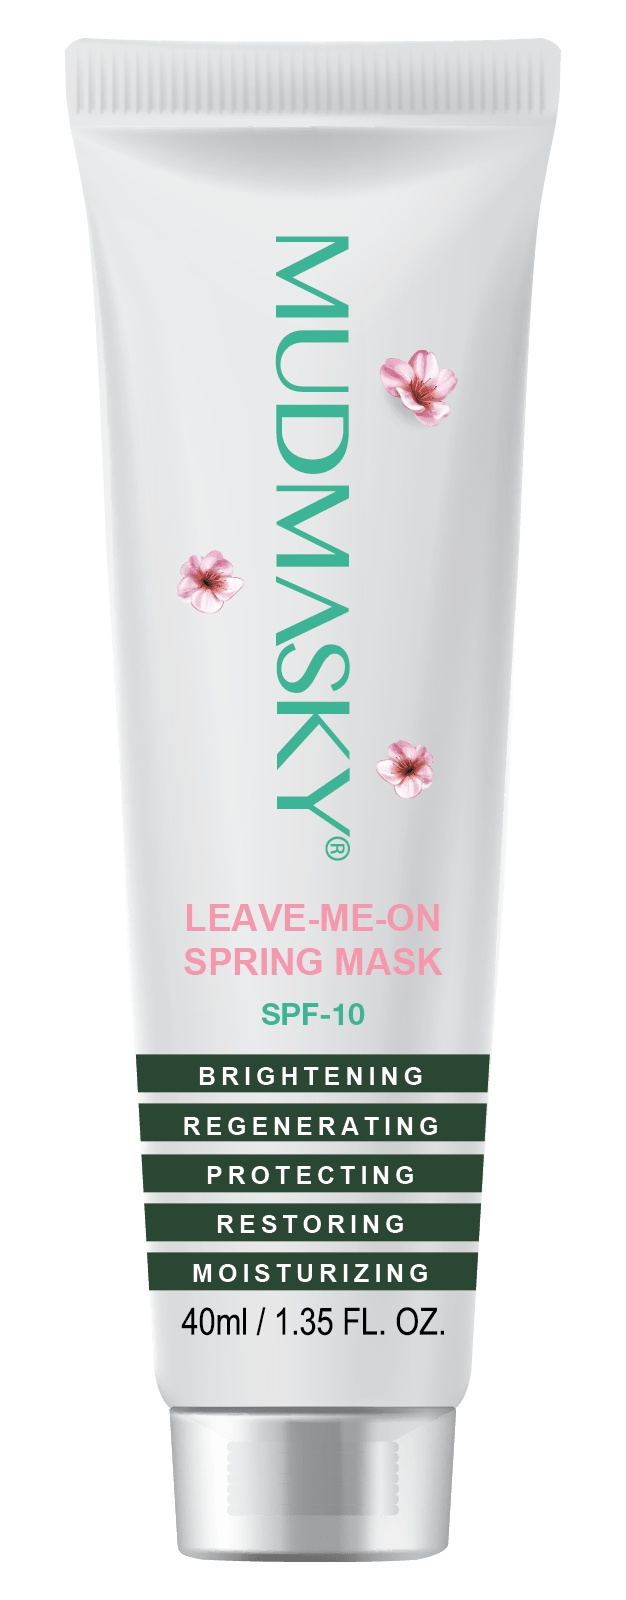 Mudmasky Leave-Me-On Spring Mask